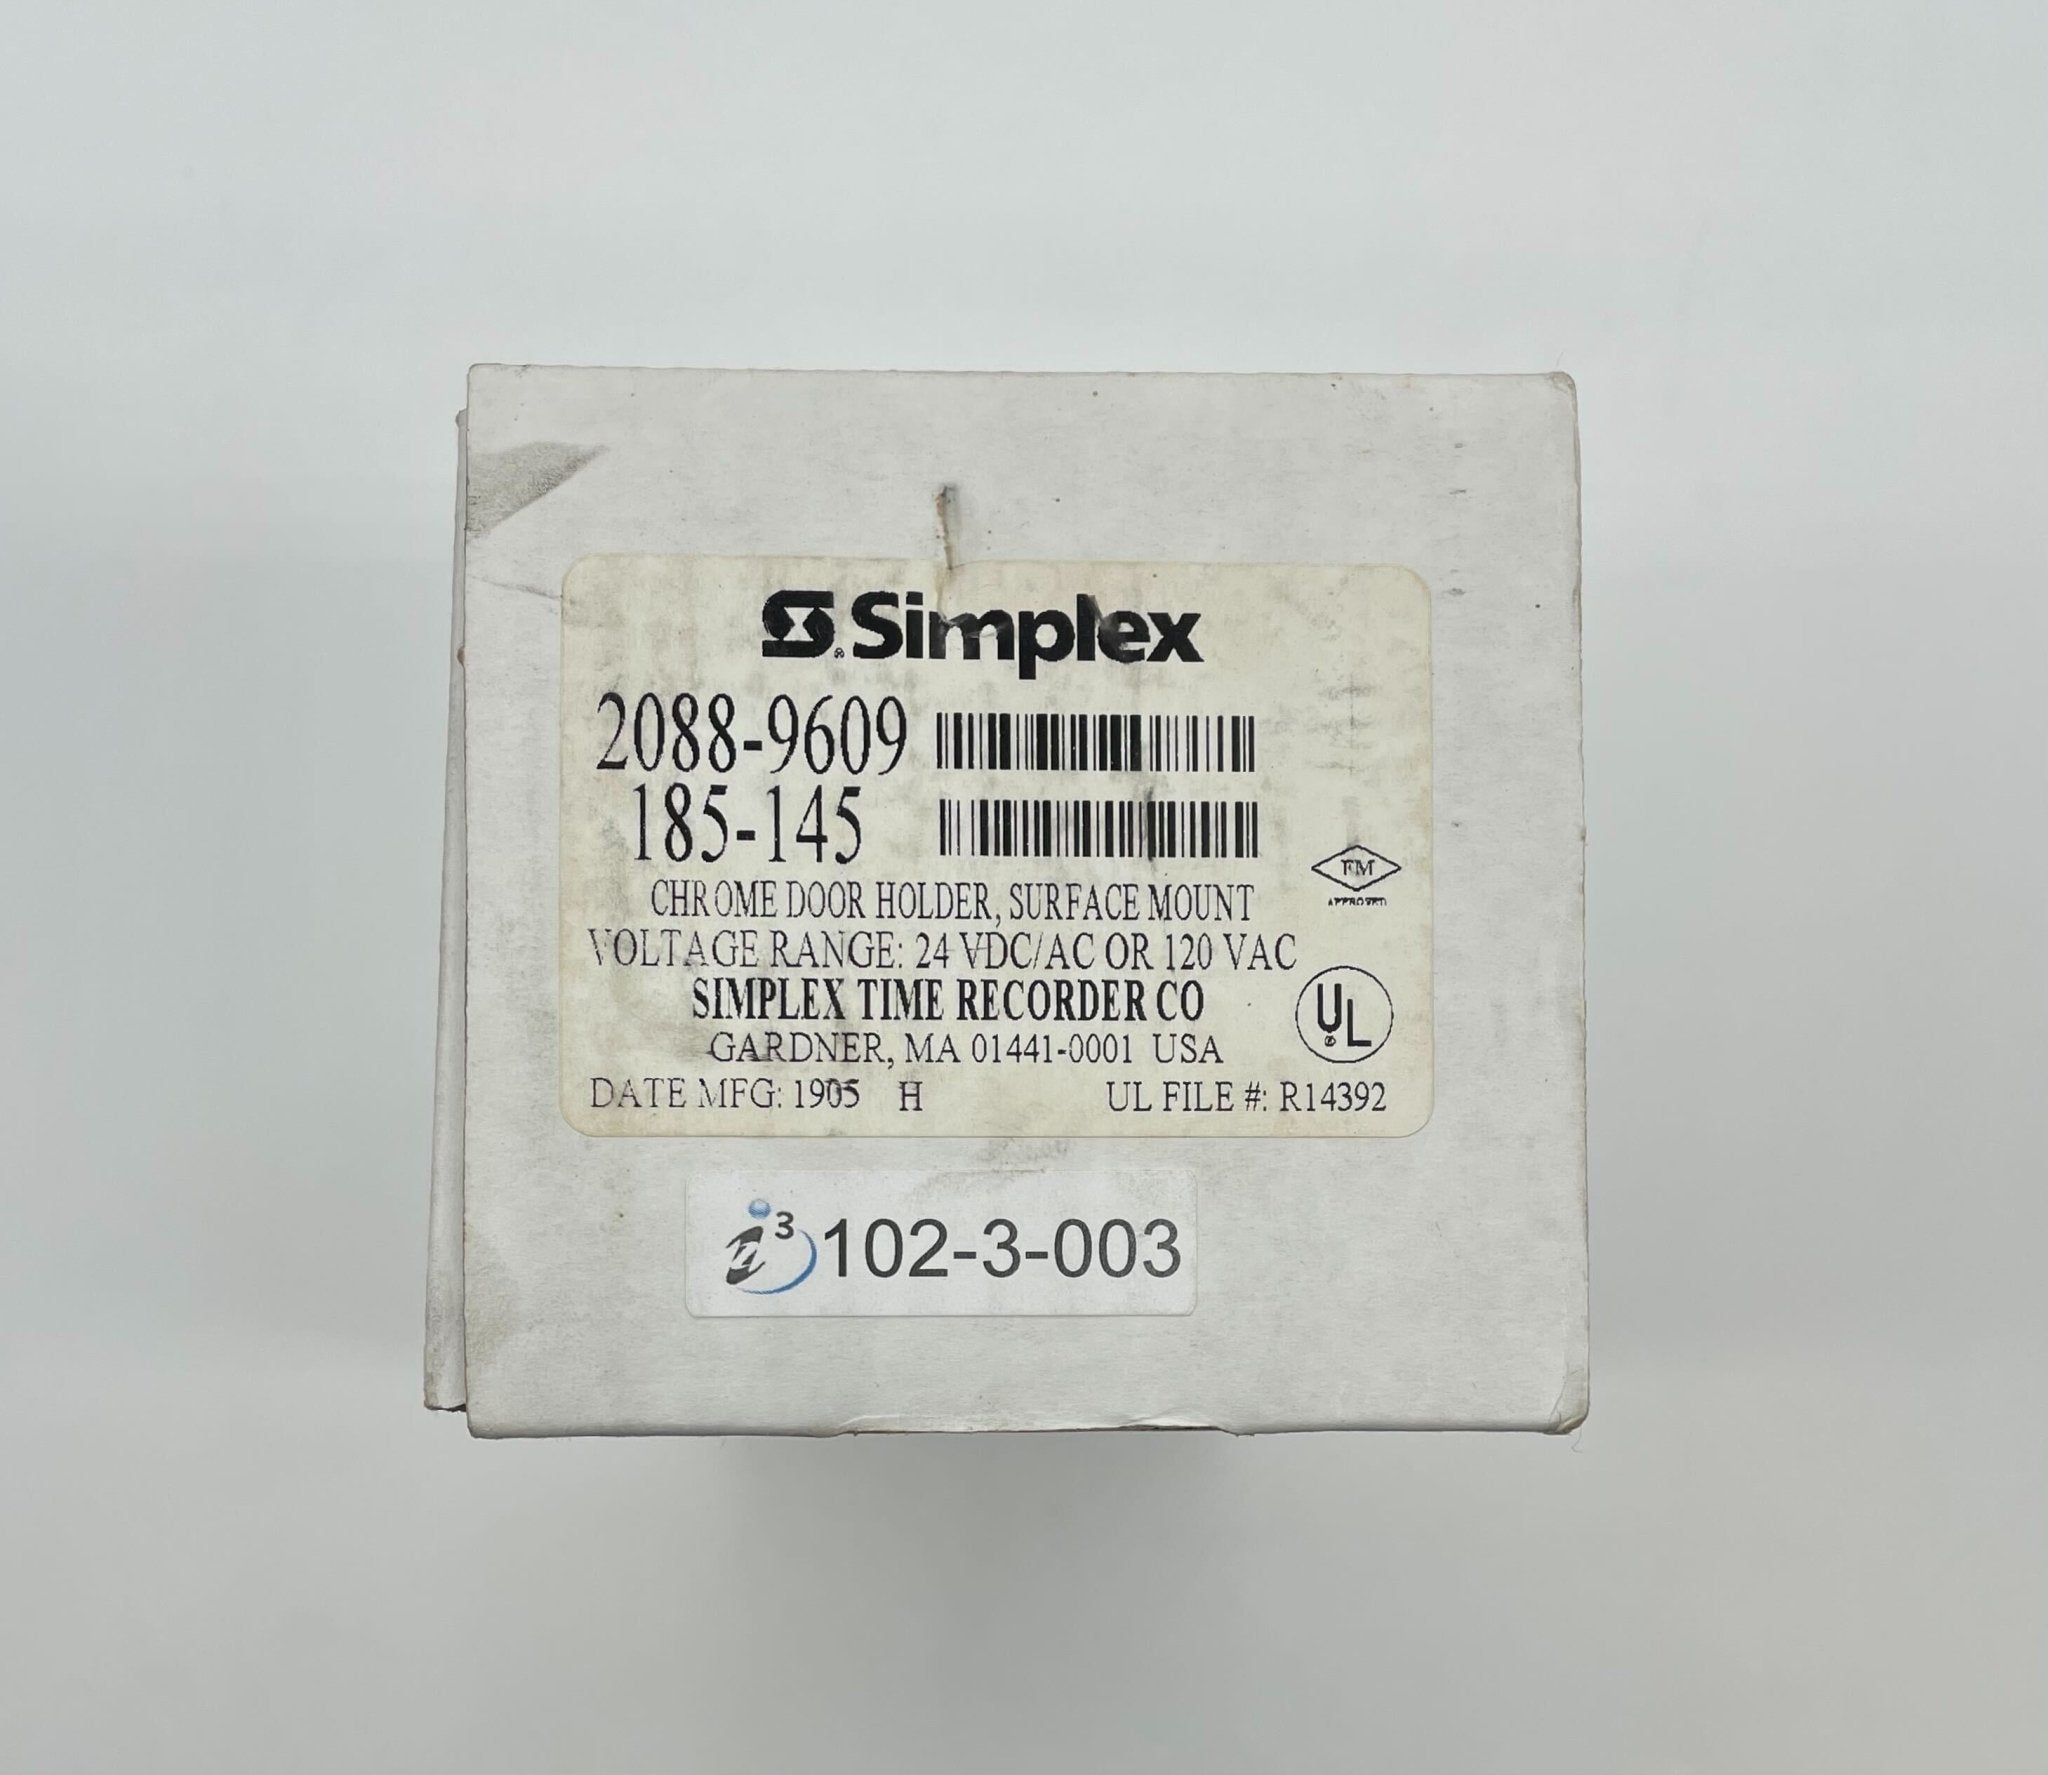 Simplex 2088-9609 - The Fire Alarm Supplier